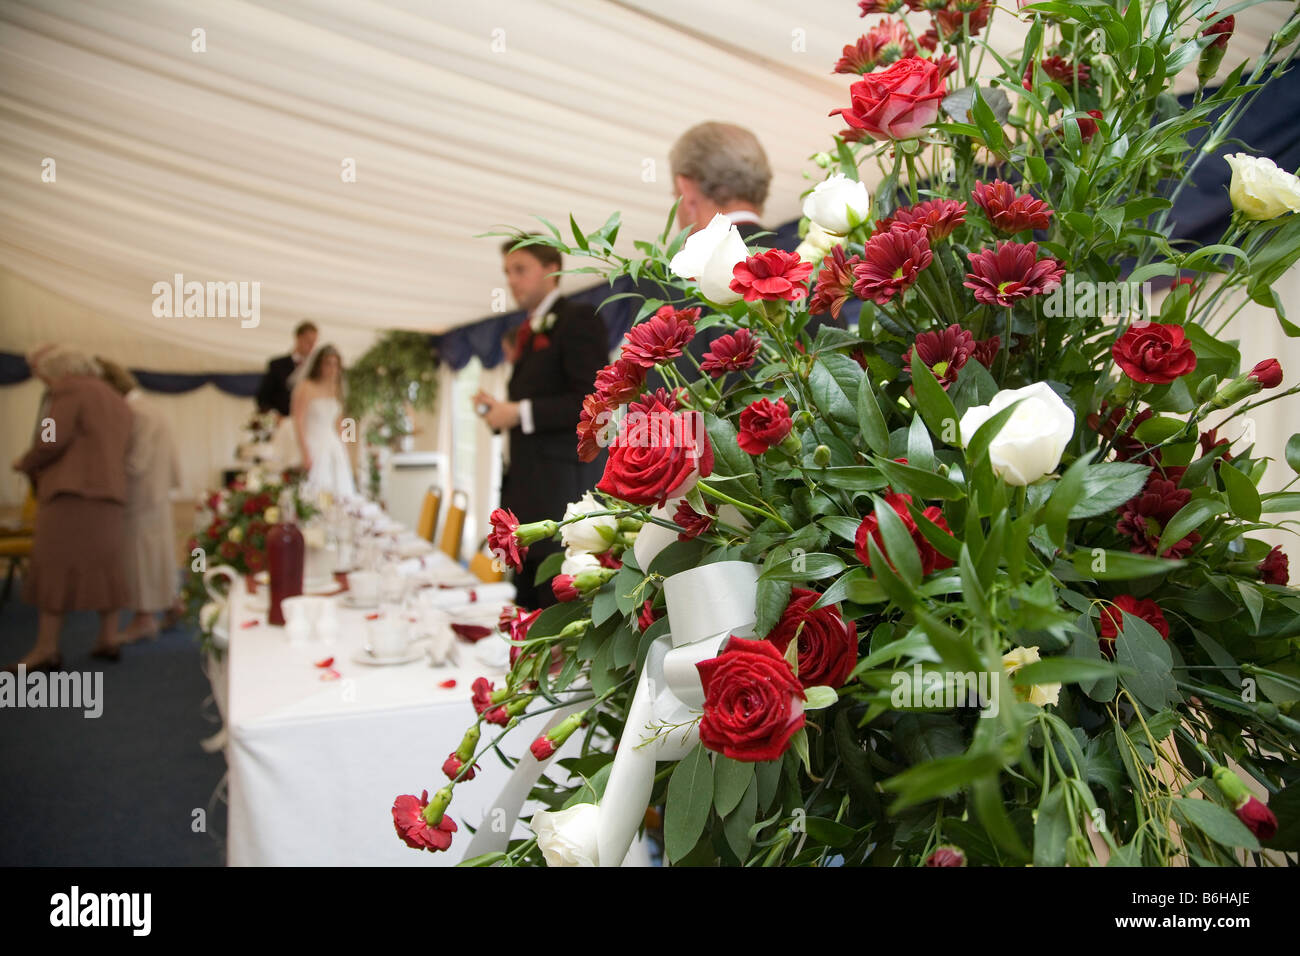 Floral display at marque wedding reception Stock Photo